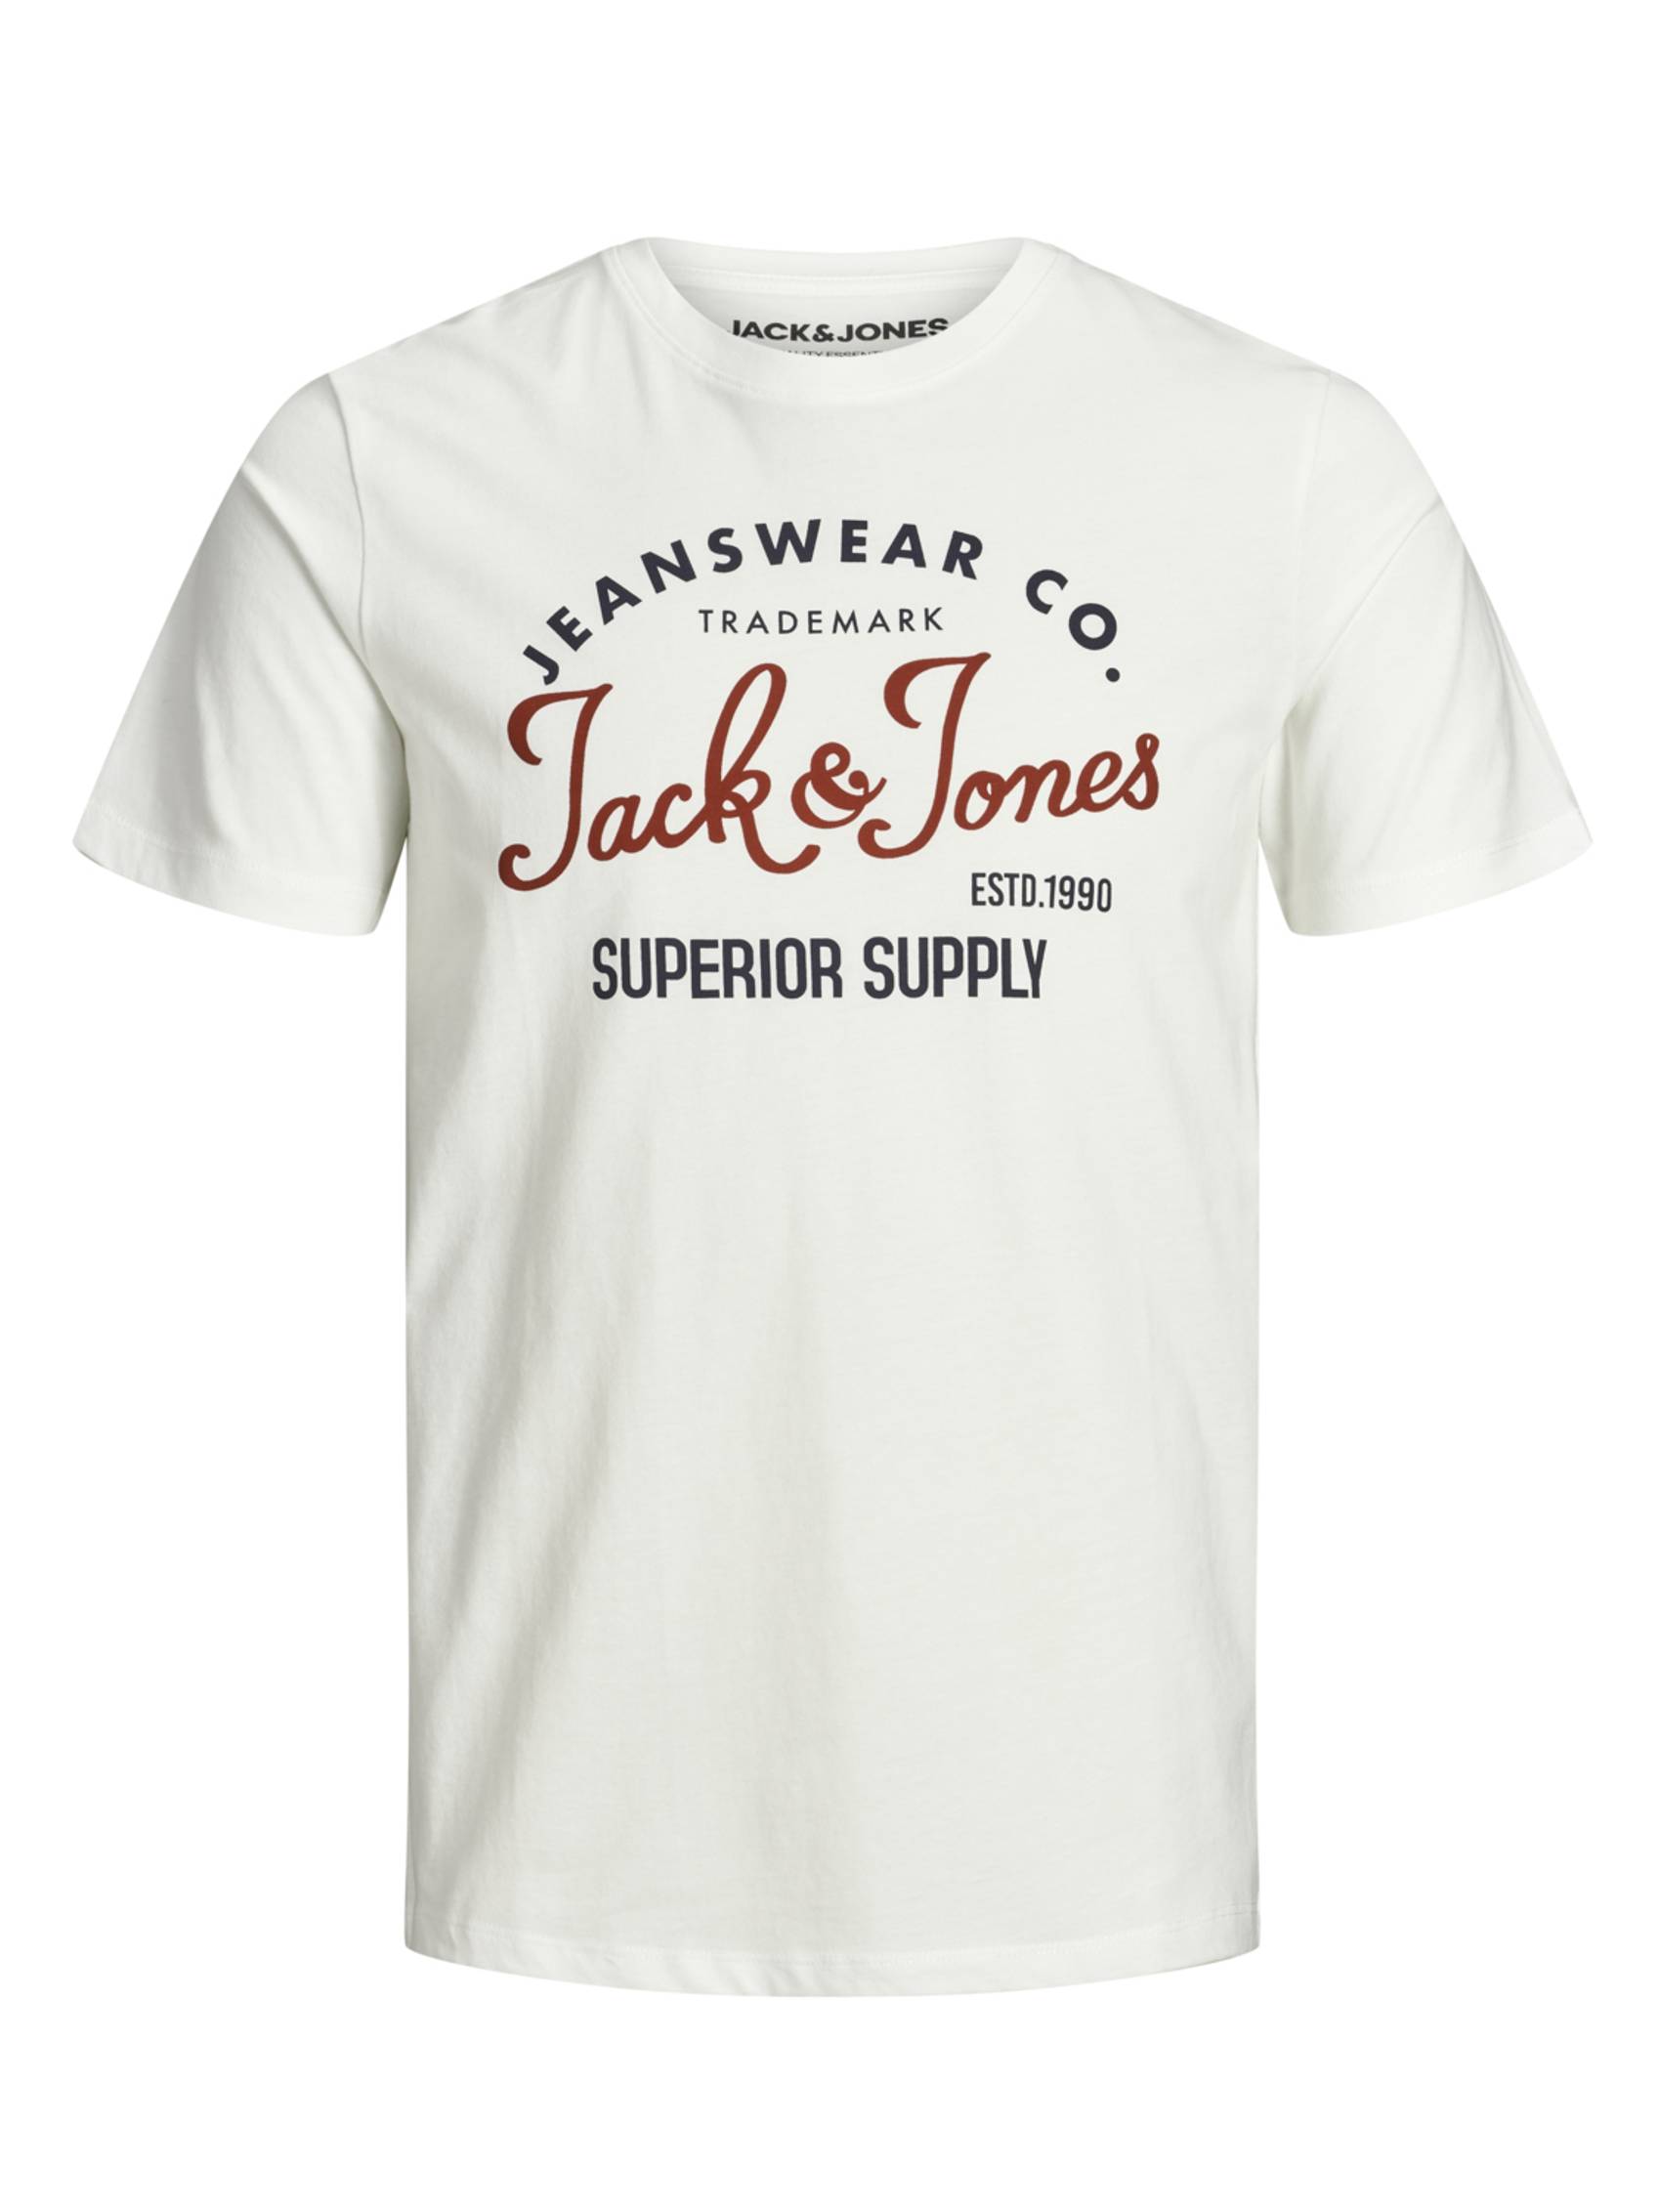 JACK & JONES JUNIOR - Worldwide Fashion Design Lookbook